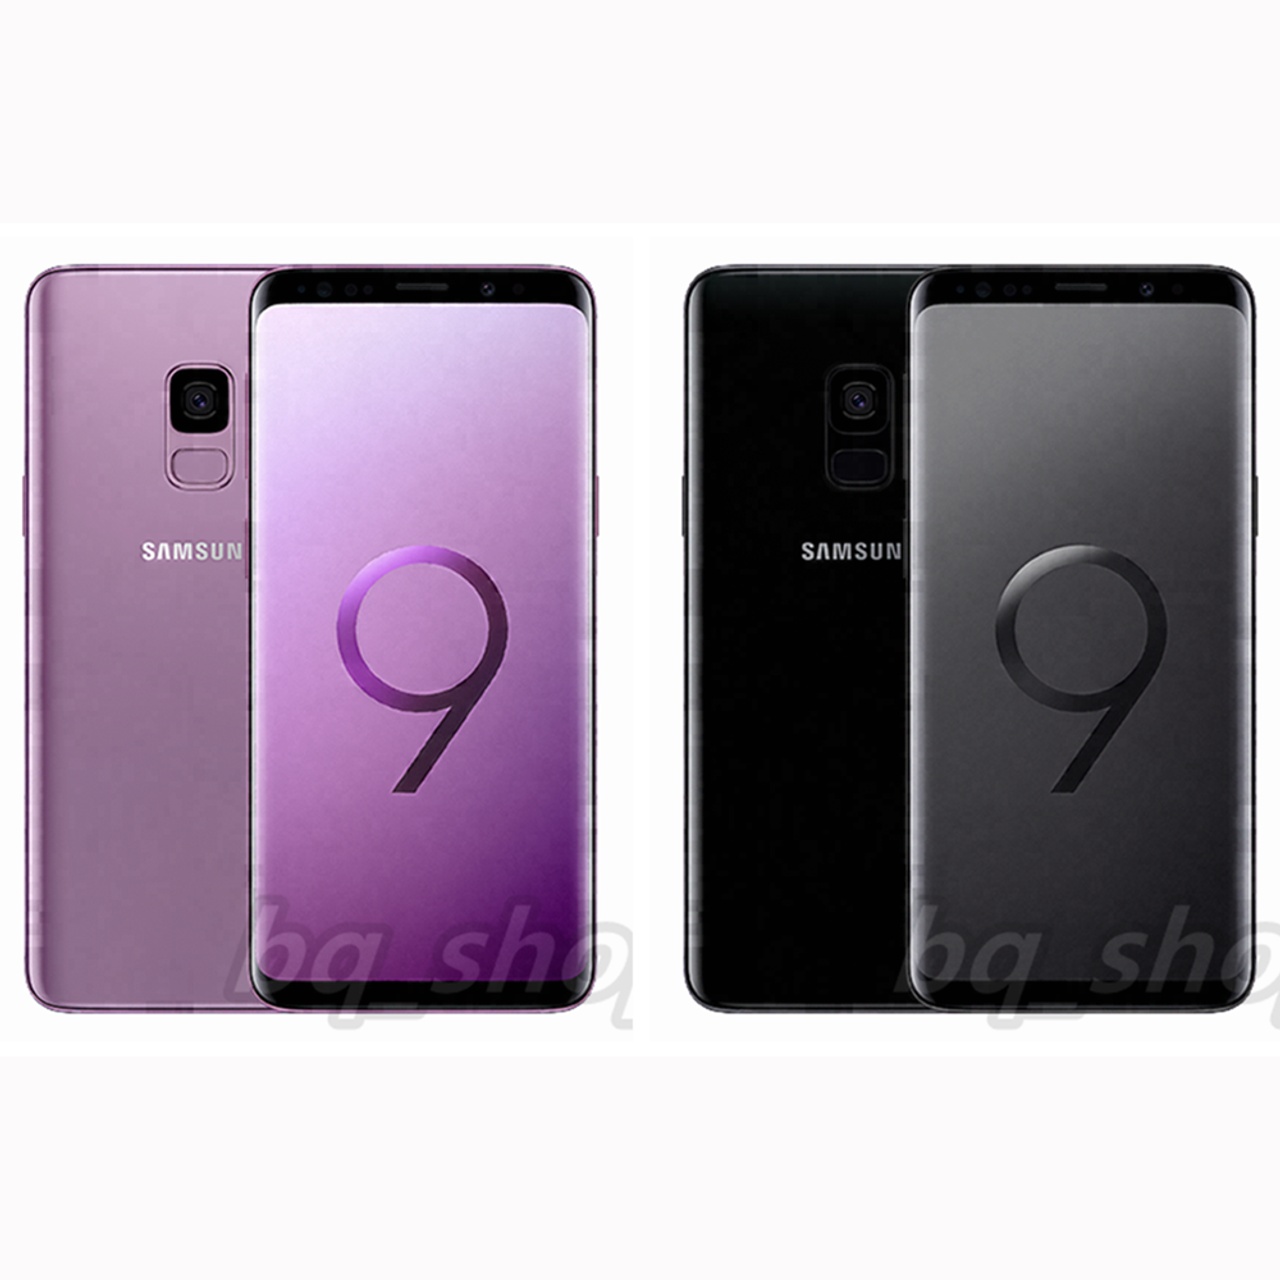 Samsung Galaxy S9 G9600 Dual Sim 64 4 Gb Ram 5 8 Android Bqshop